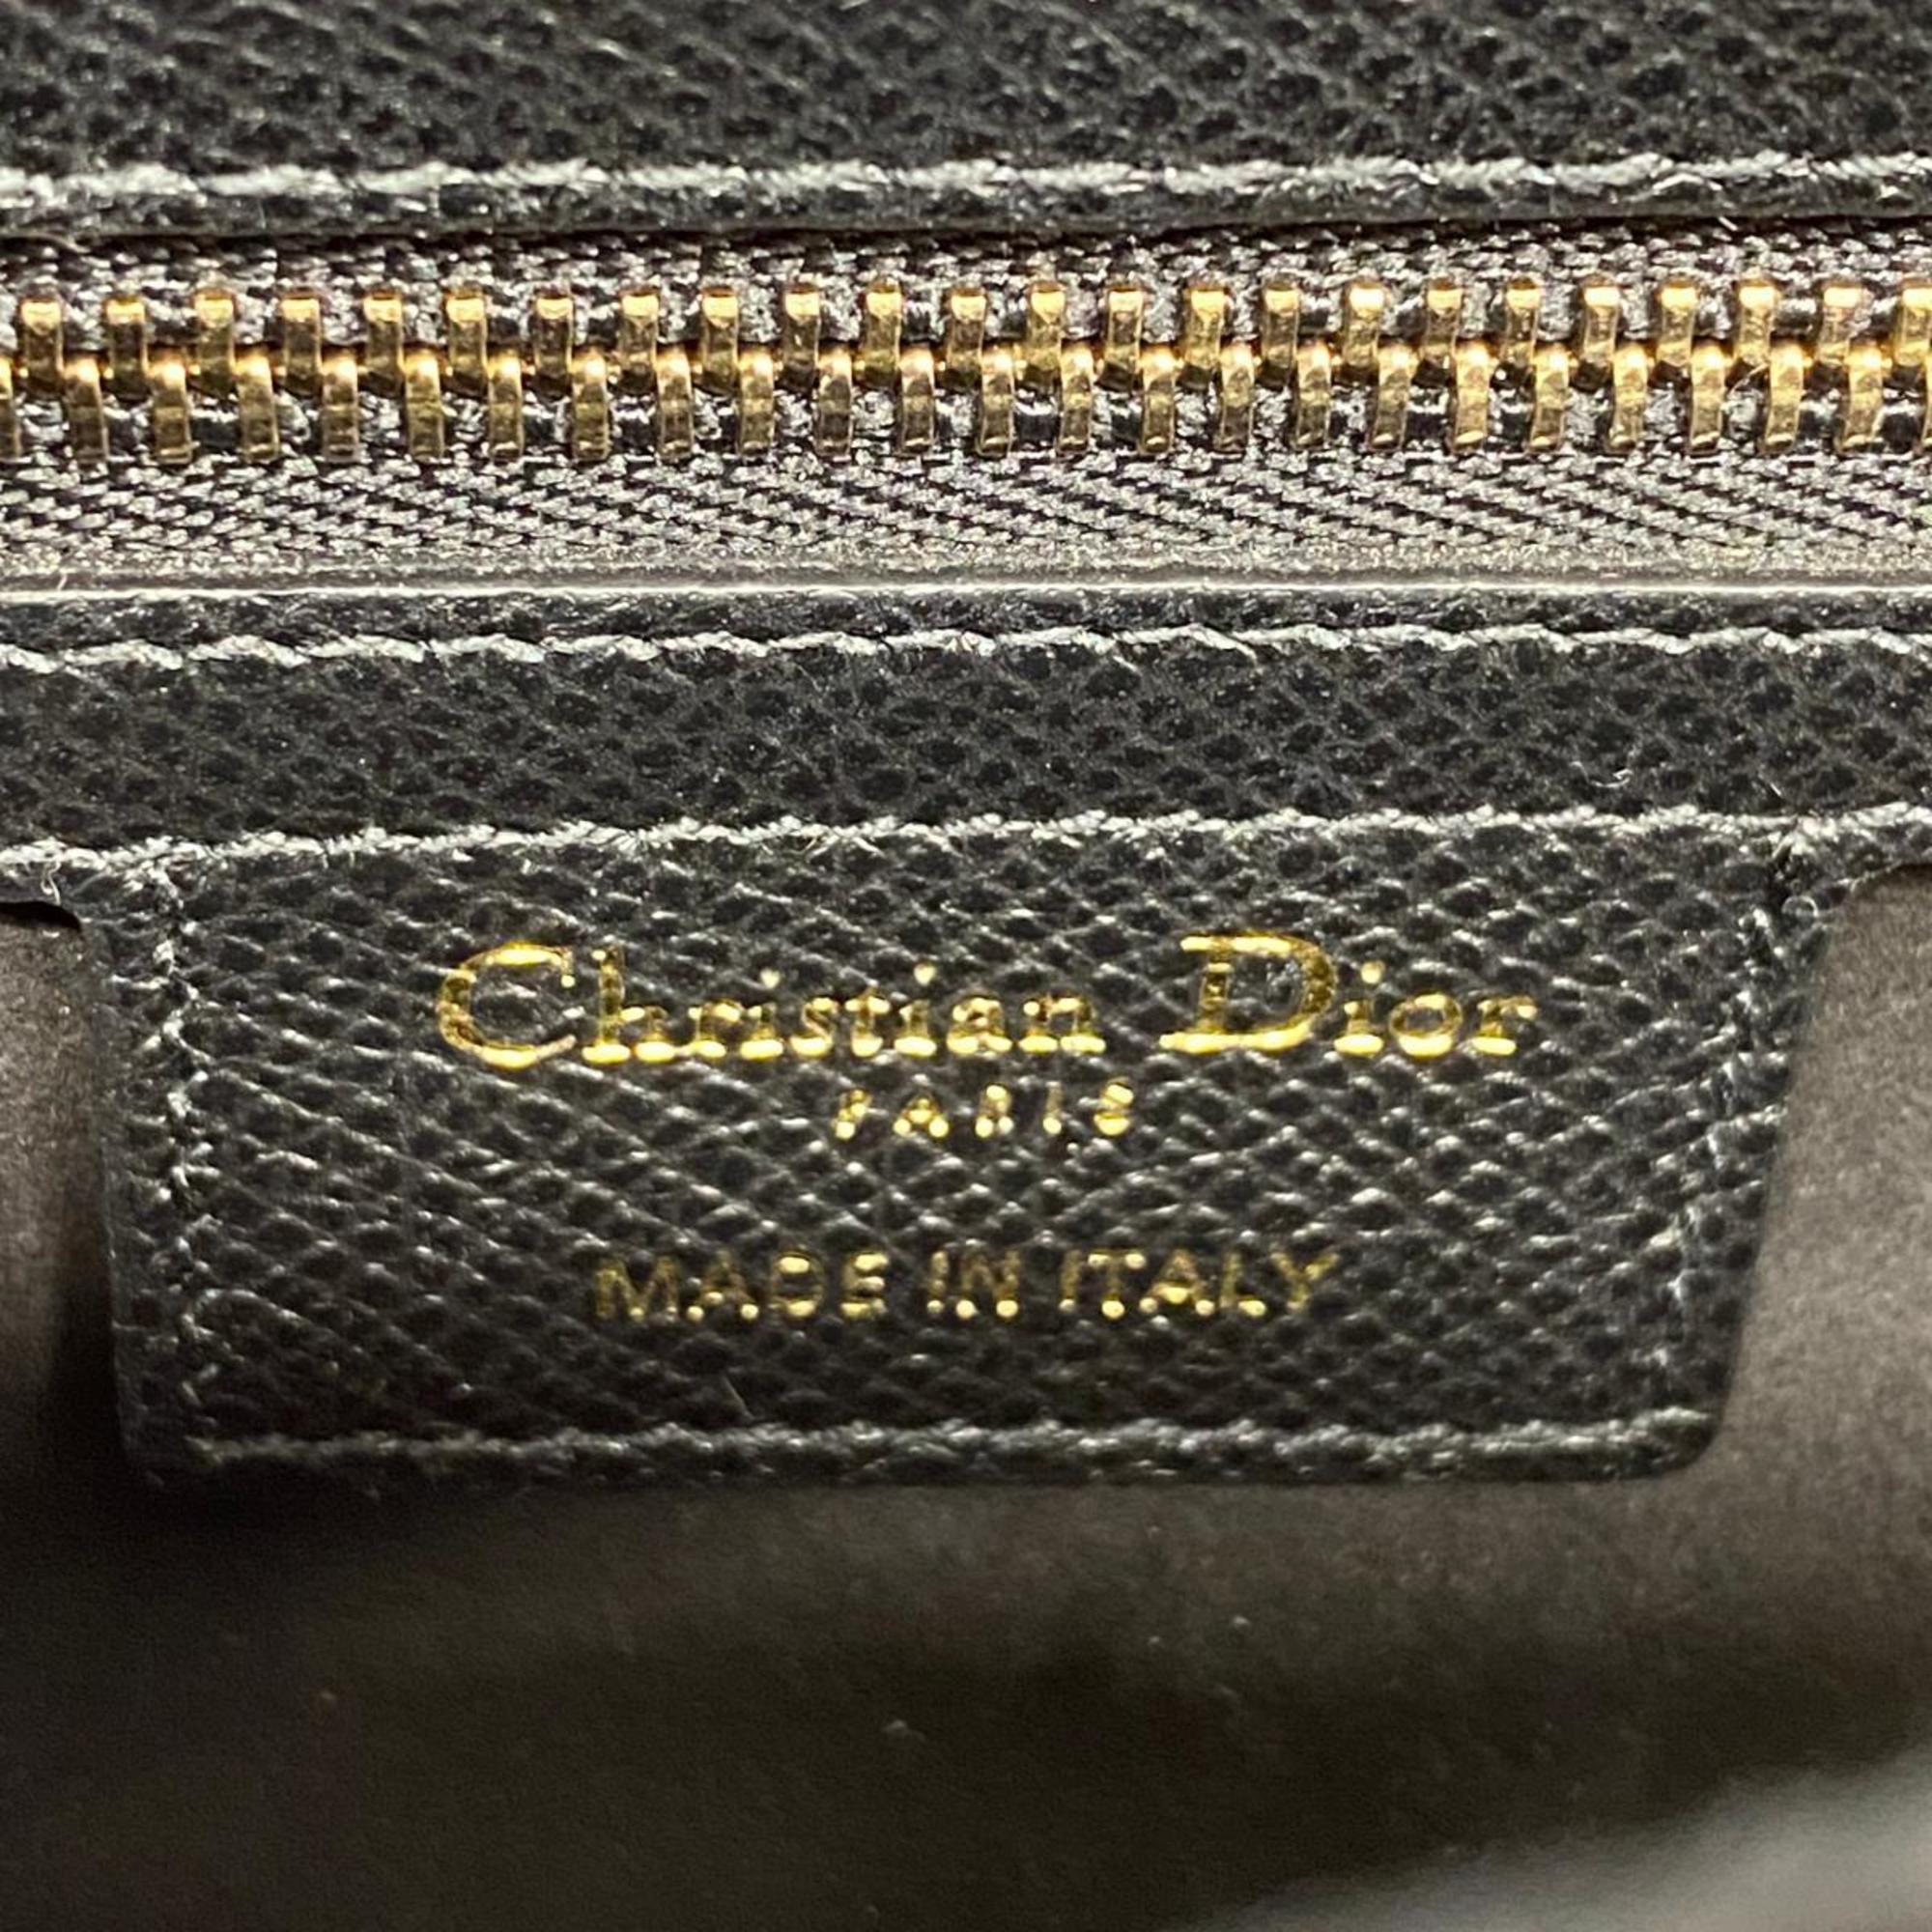 Christian Dior Handbag Saddle Bag Leather Black Women's